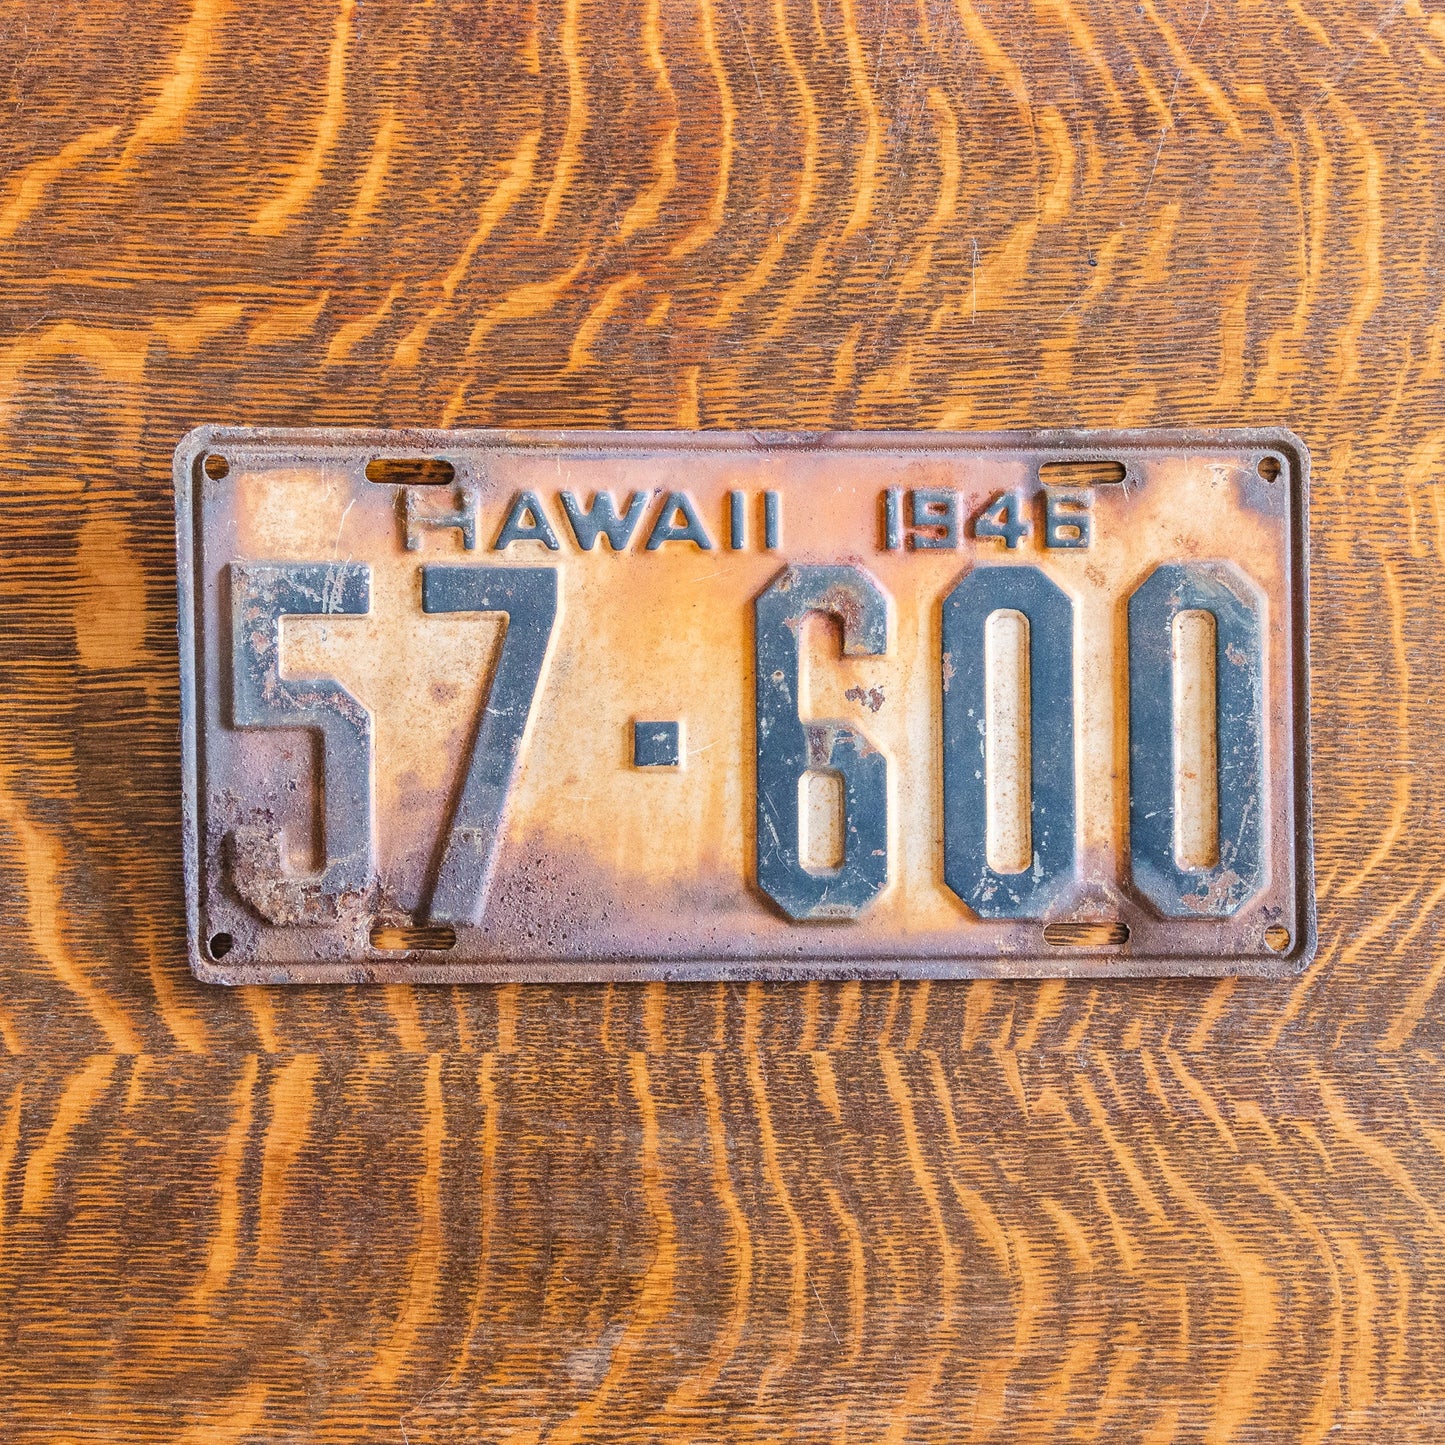 1946 Hawaii Truck License Plate Oahu Early Pre State-Hood Auto Tag